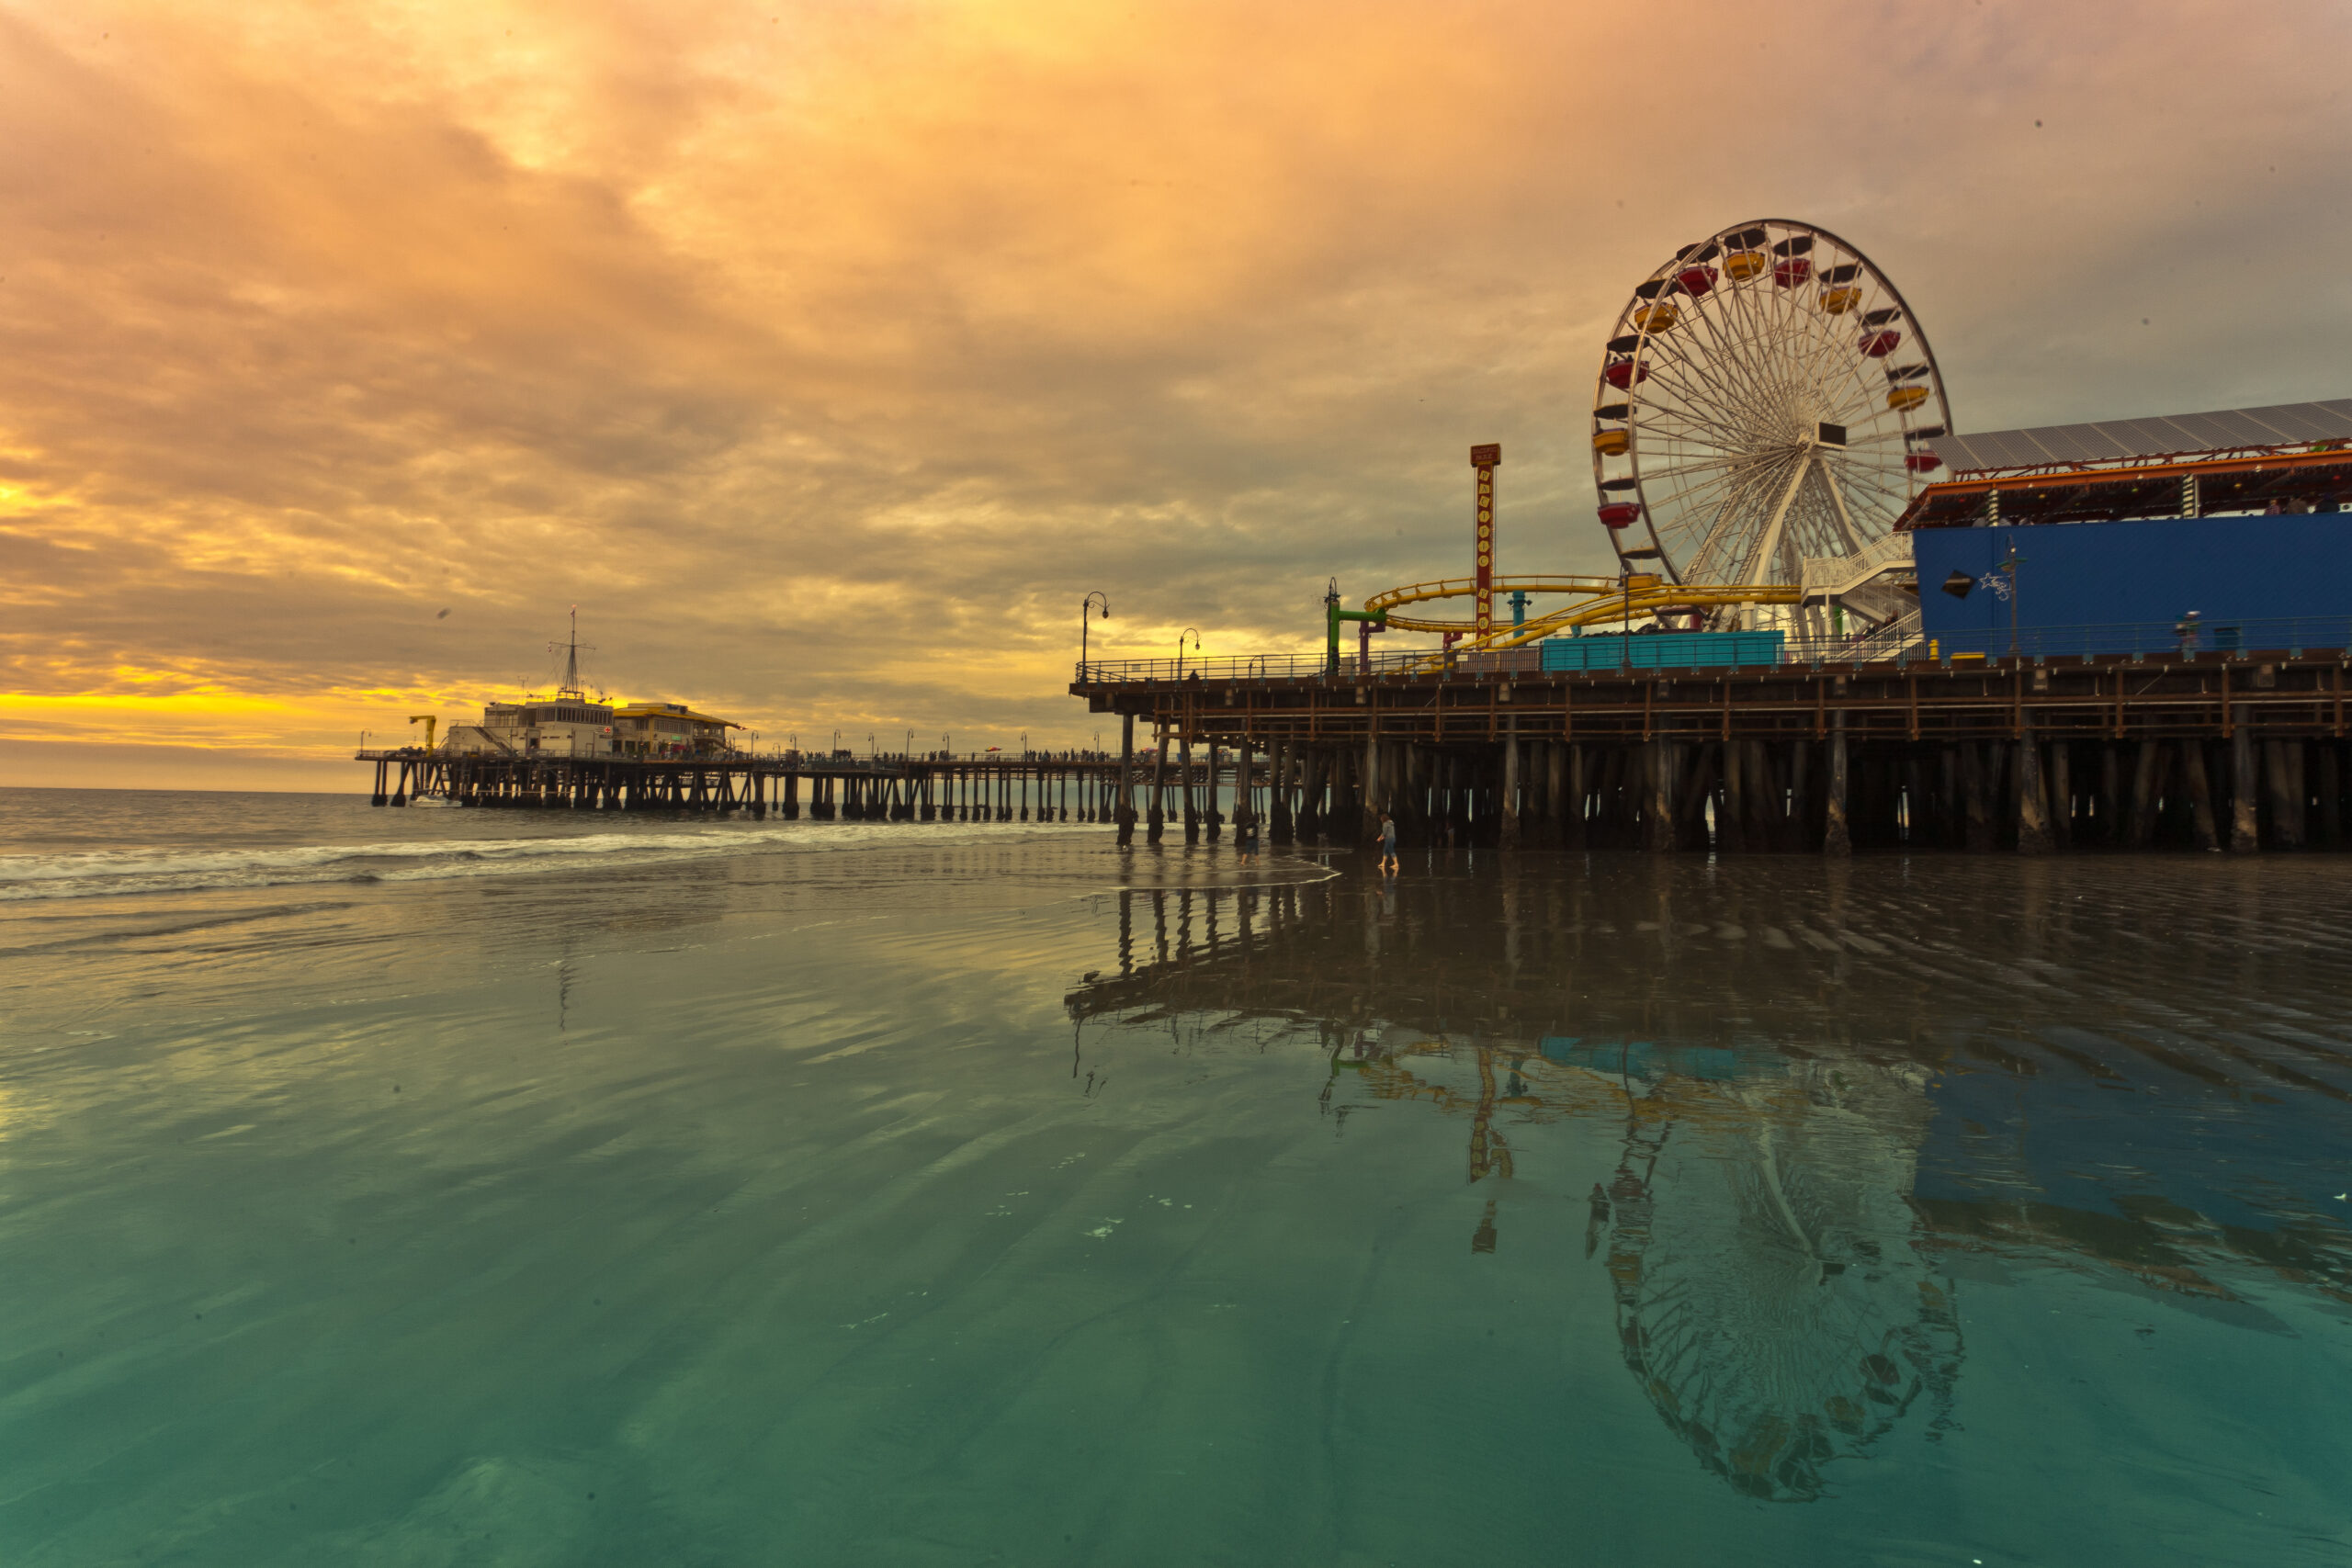 Santa Monica Pier's Pacific Park was named best amusement park in California